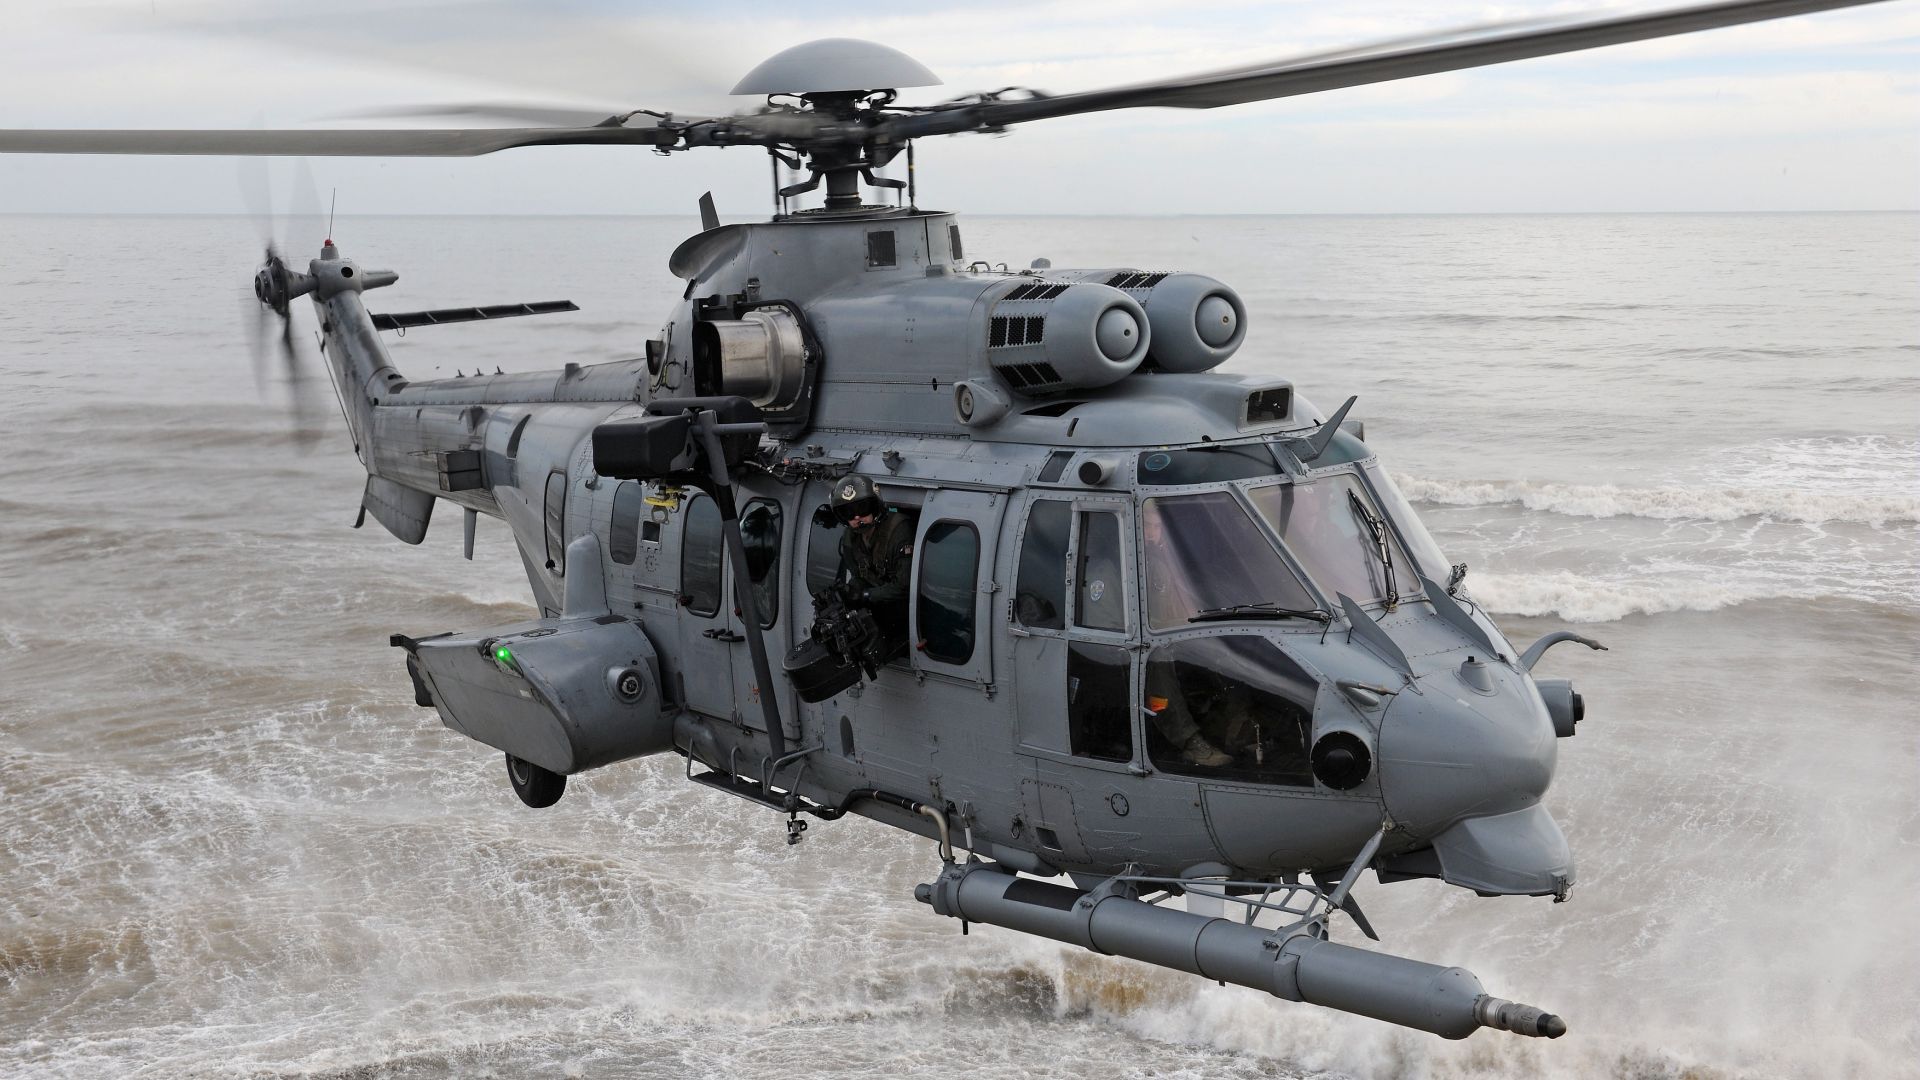 Airbus Helicopters H225M, ударный вертолет, Eurocopter EC725, ВВС Франции, Airbus Helicopters H225M, Eurocopter EC725, France Air Force, France army (horizontal)